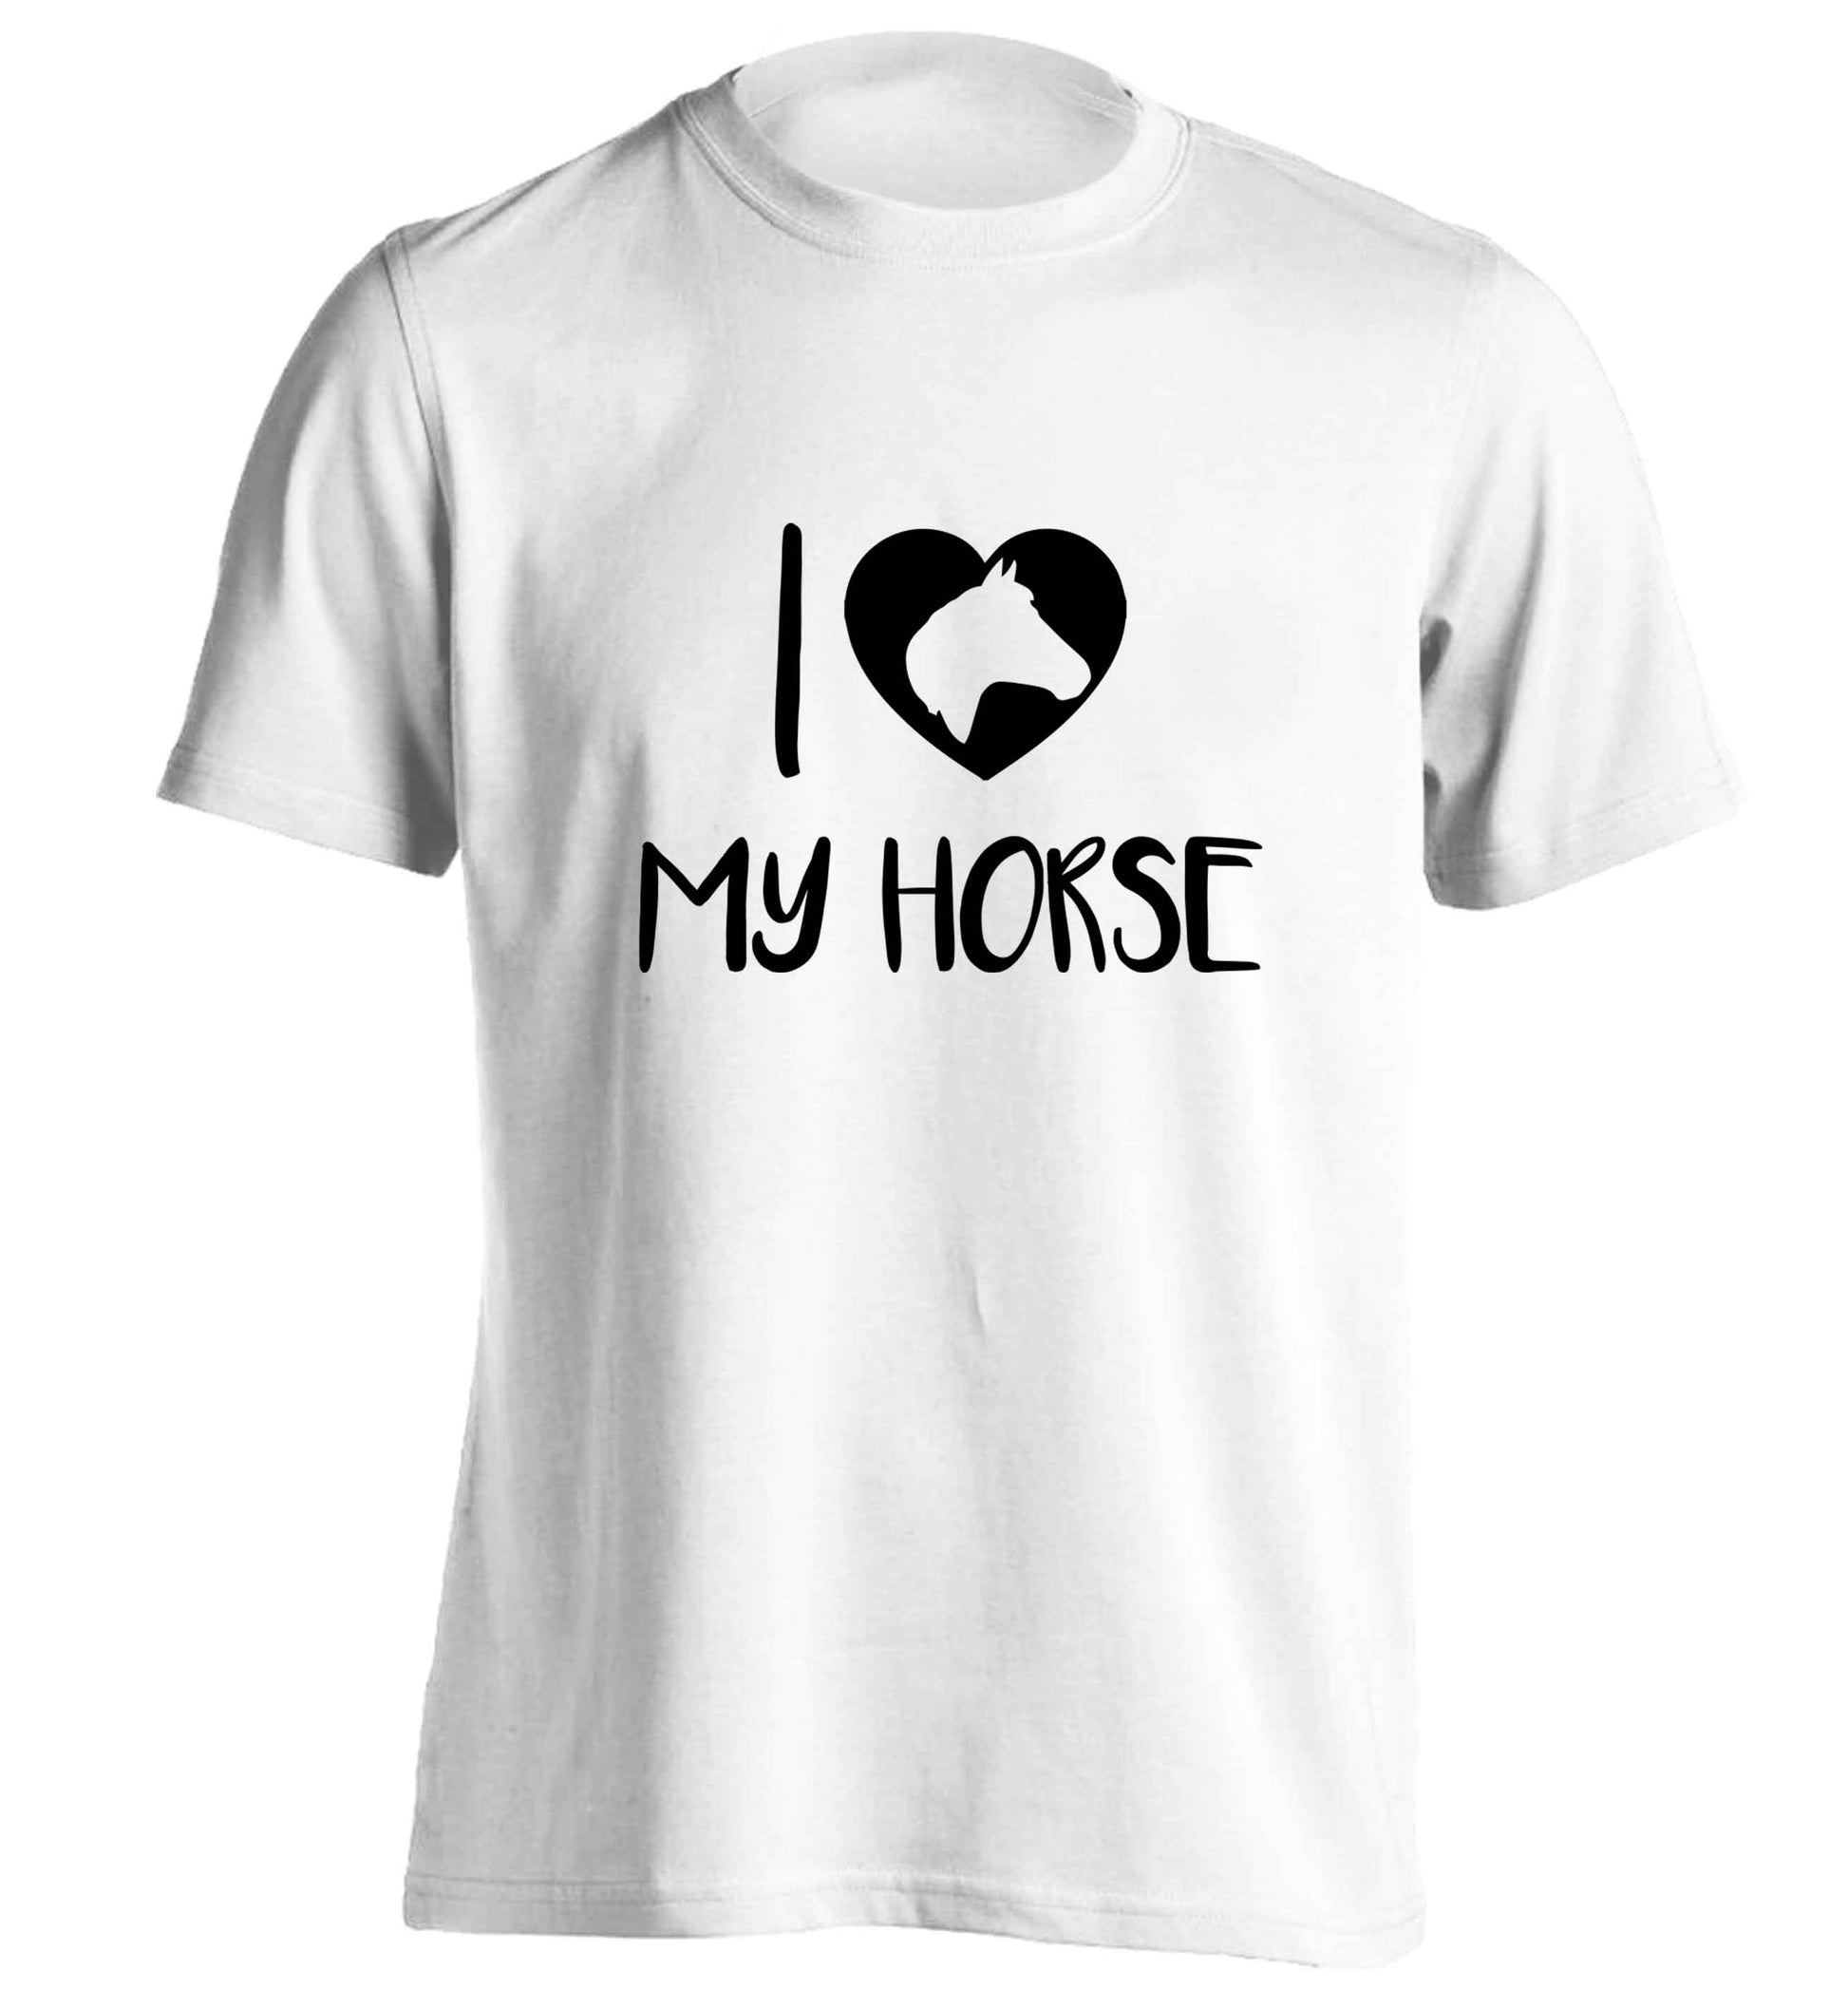 I love my horse adults unisex white Tshirt 2XL